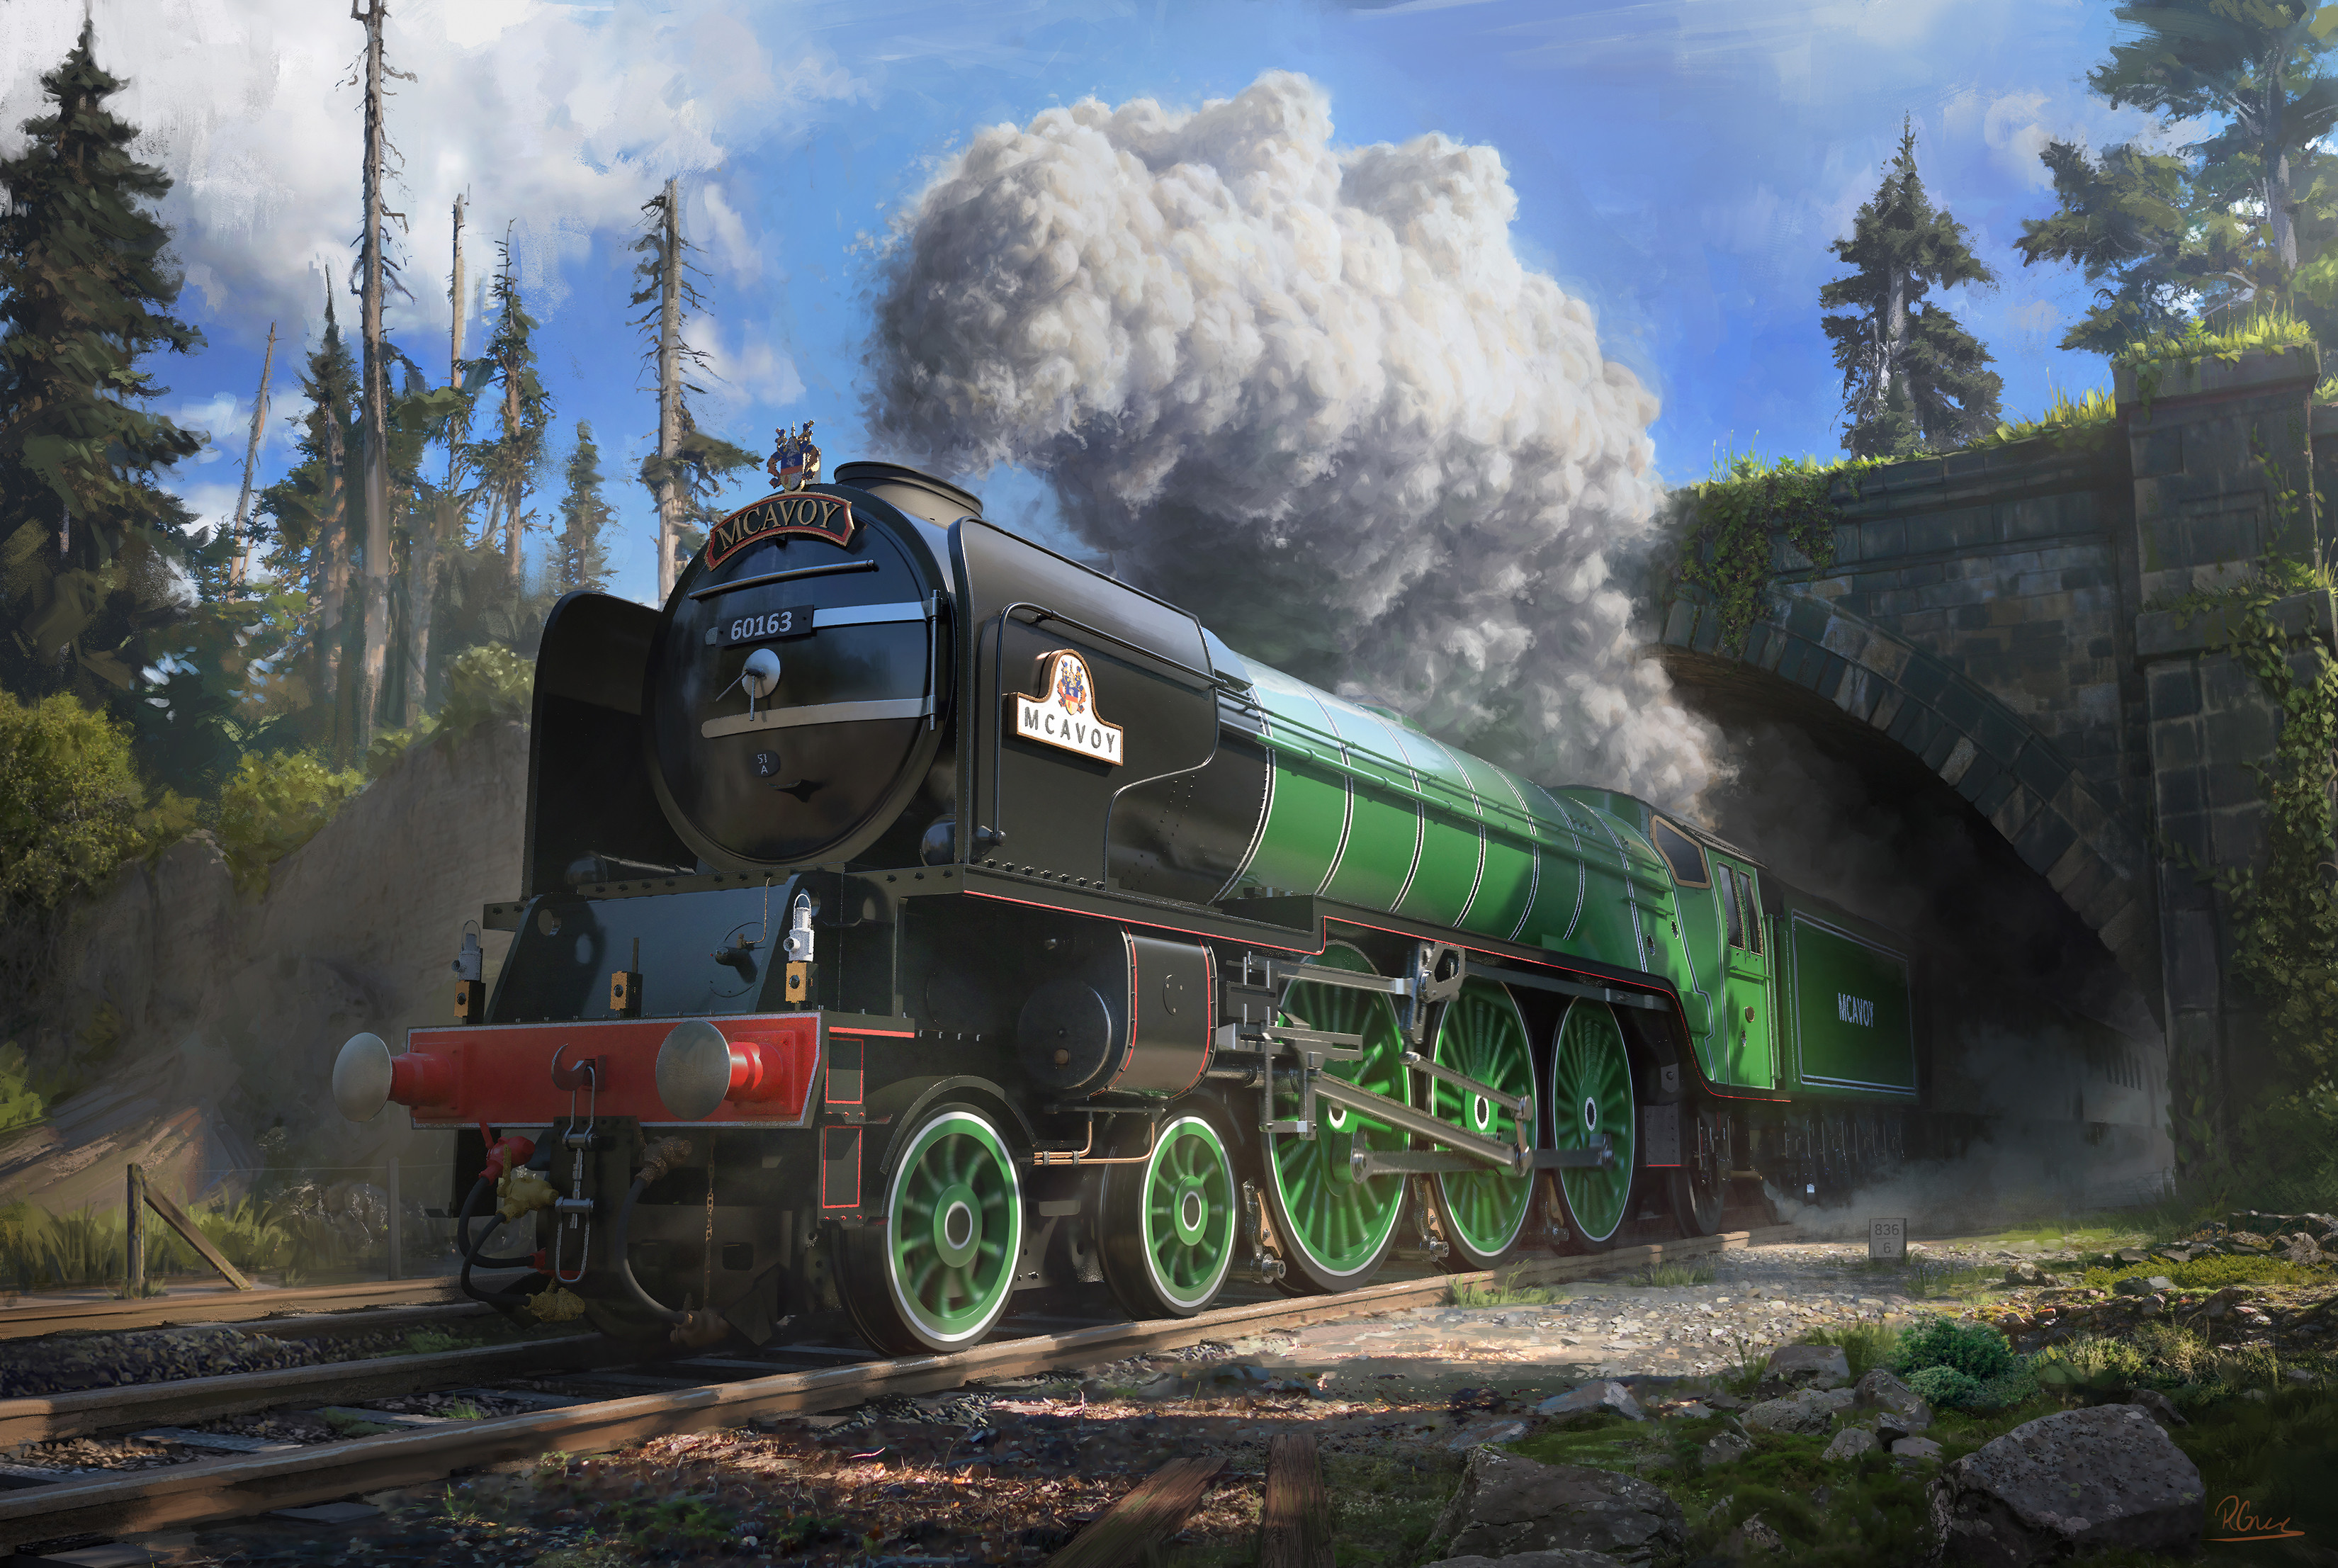 Rob Green Train Vehicle Locomotive Steam Locomotive Steam Train 3300x2213